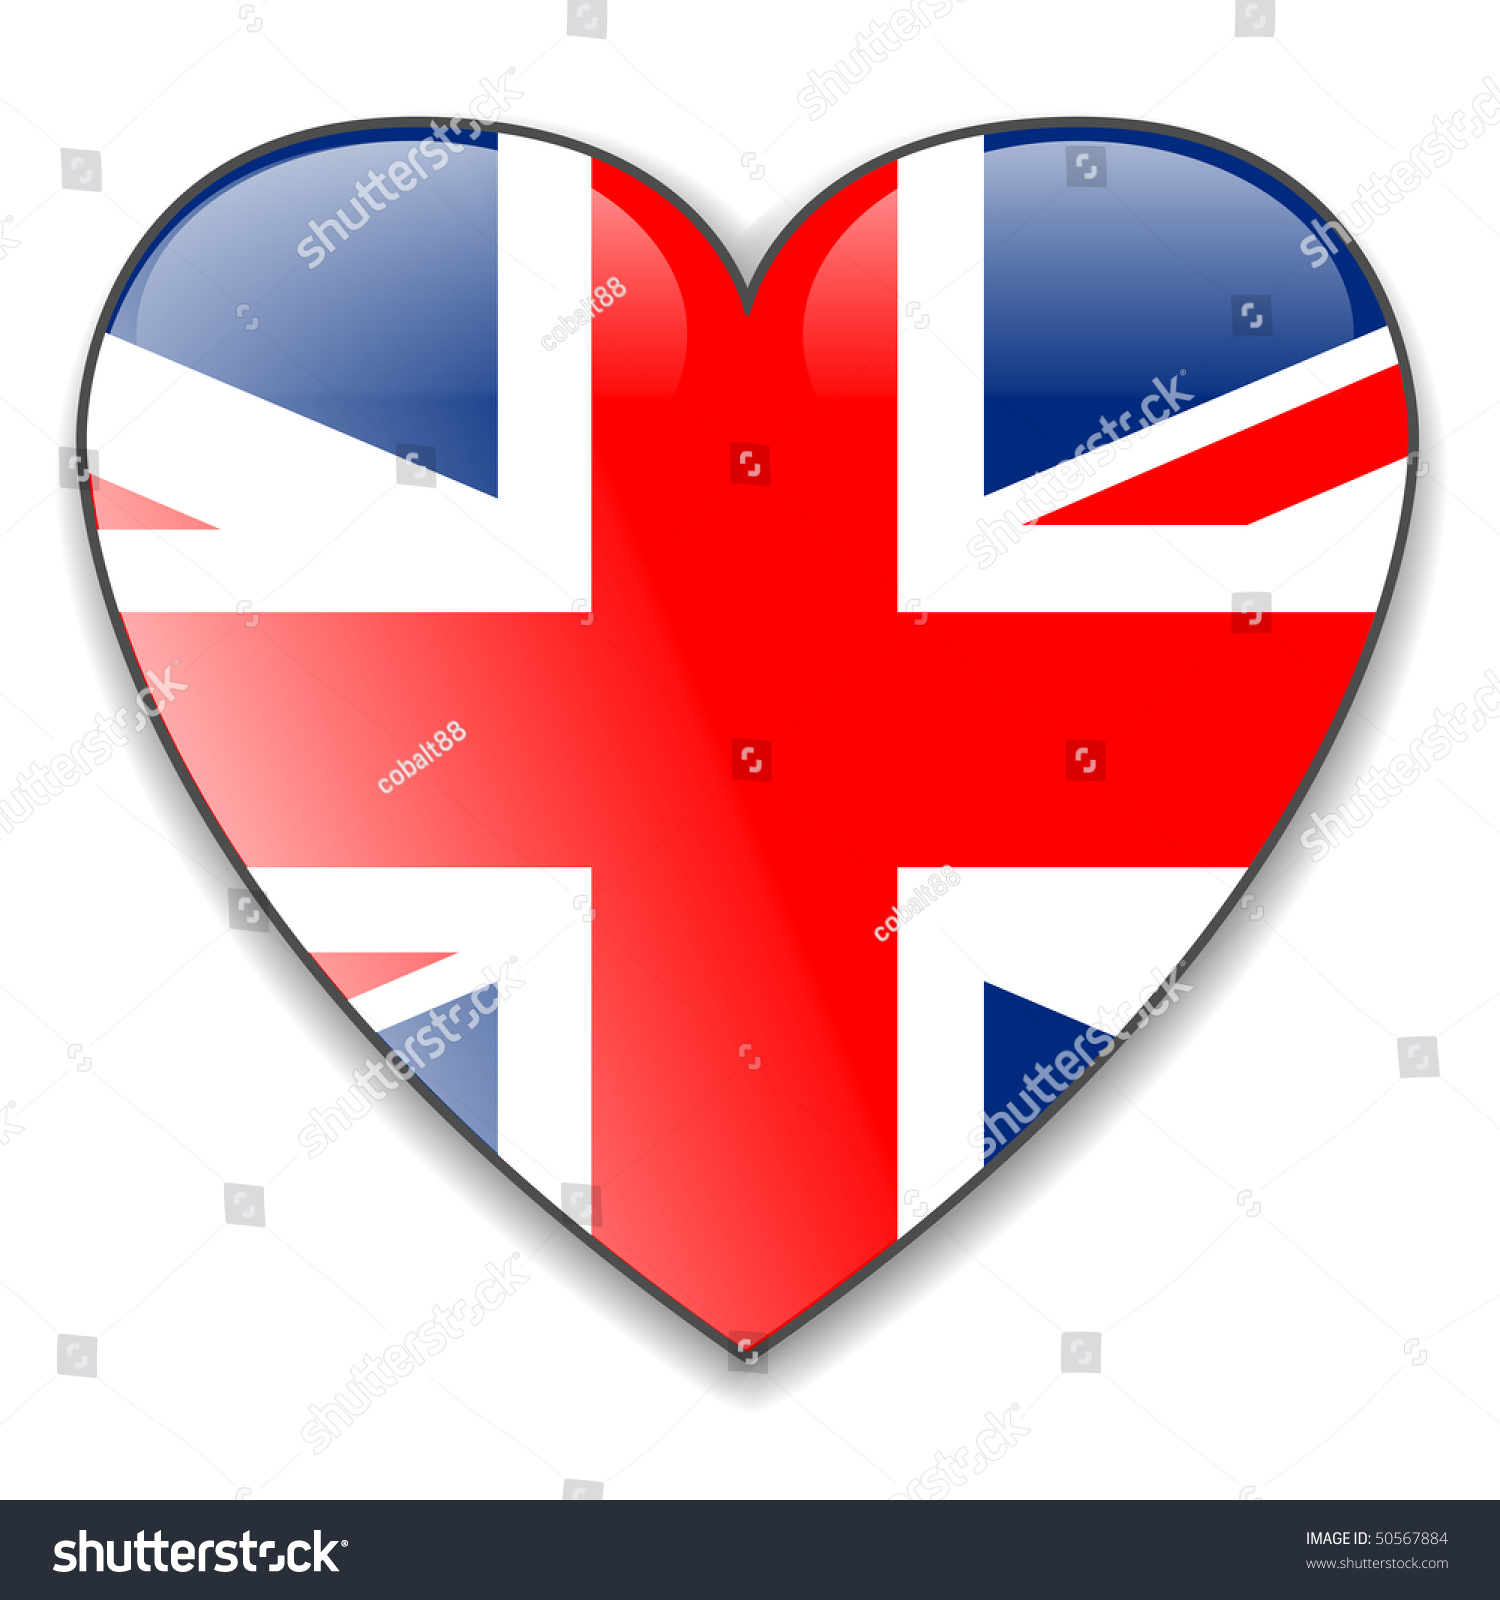 United Kingdom Uk Flag Heart Button, Vector - 50567884 : Shutterstock